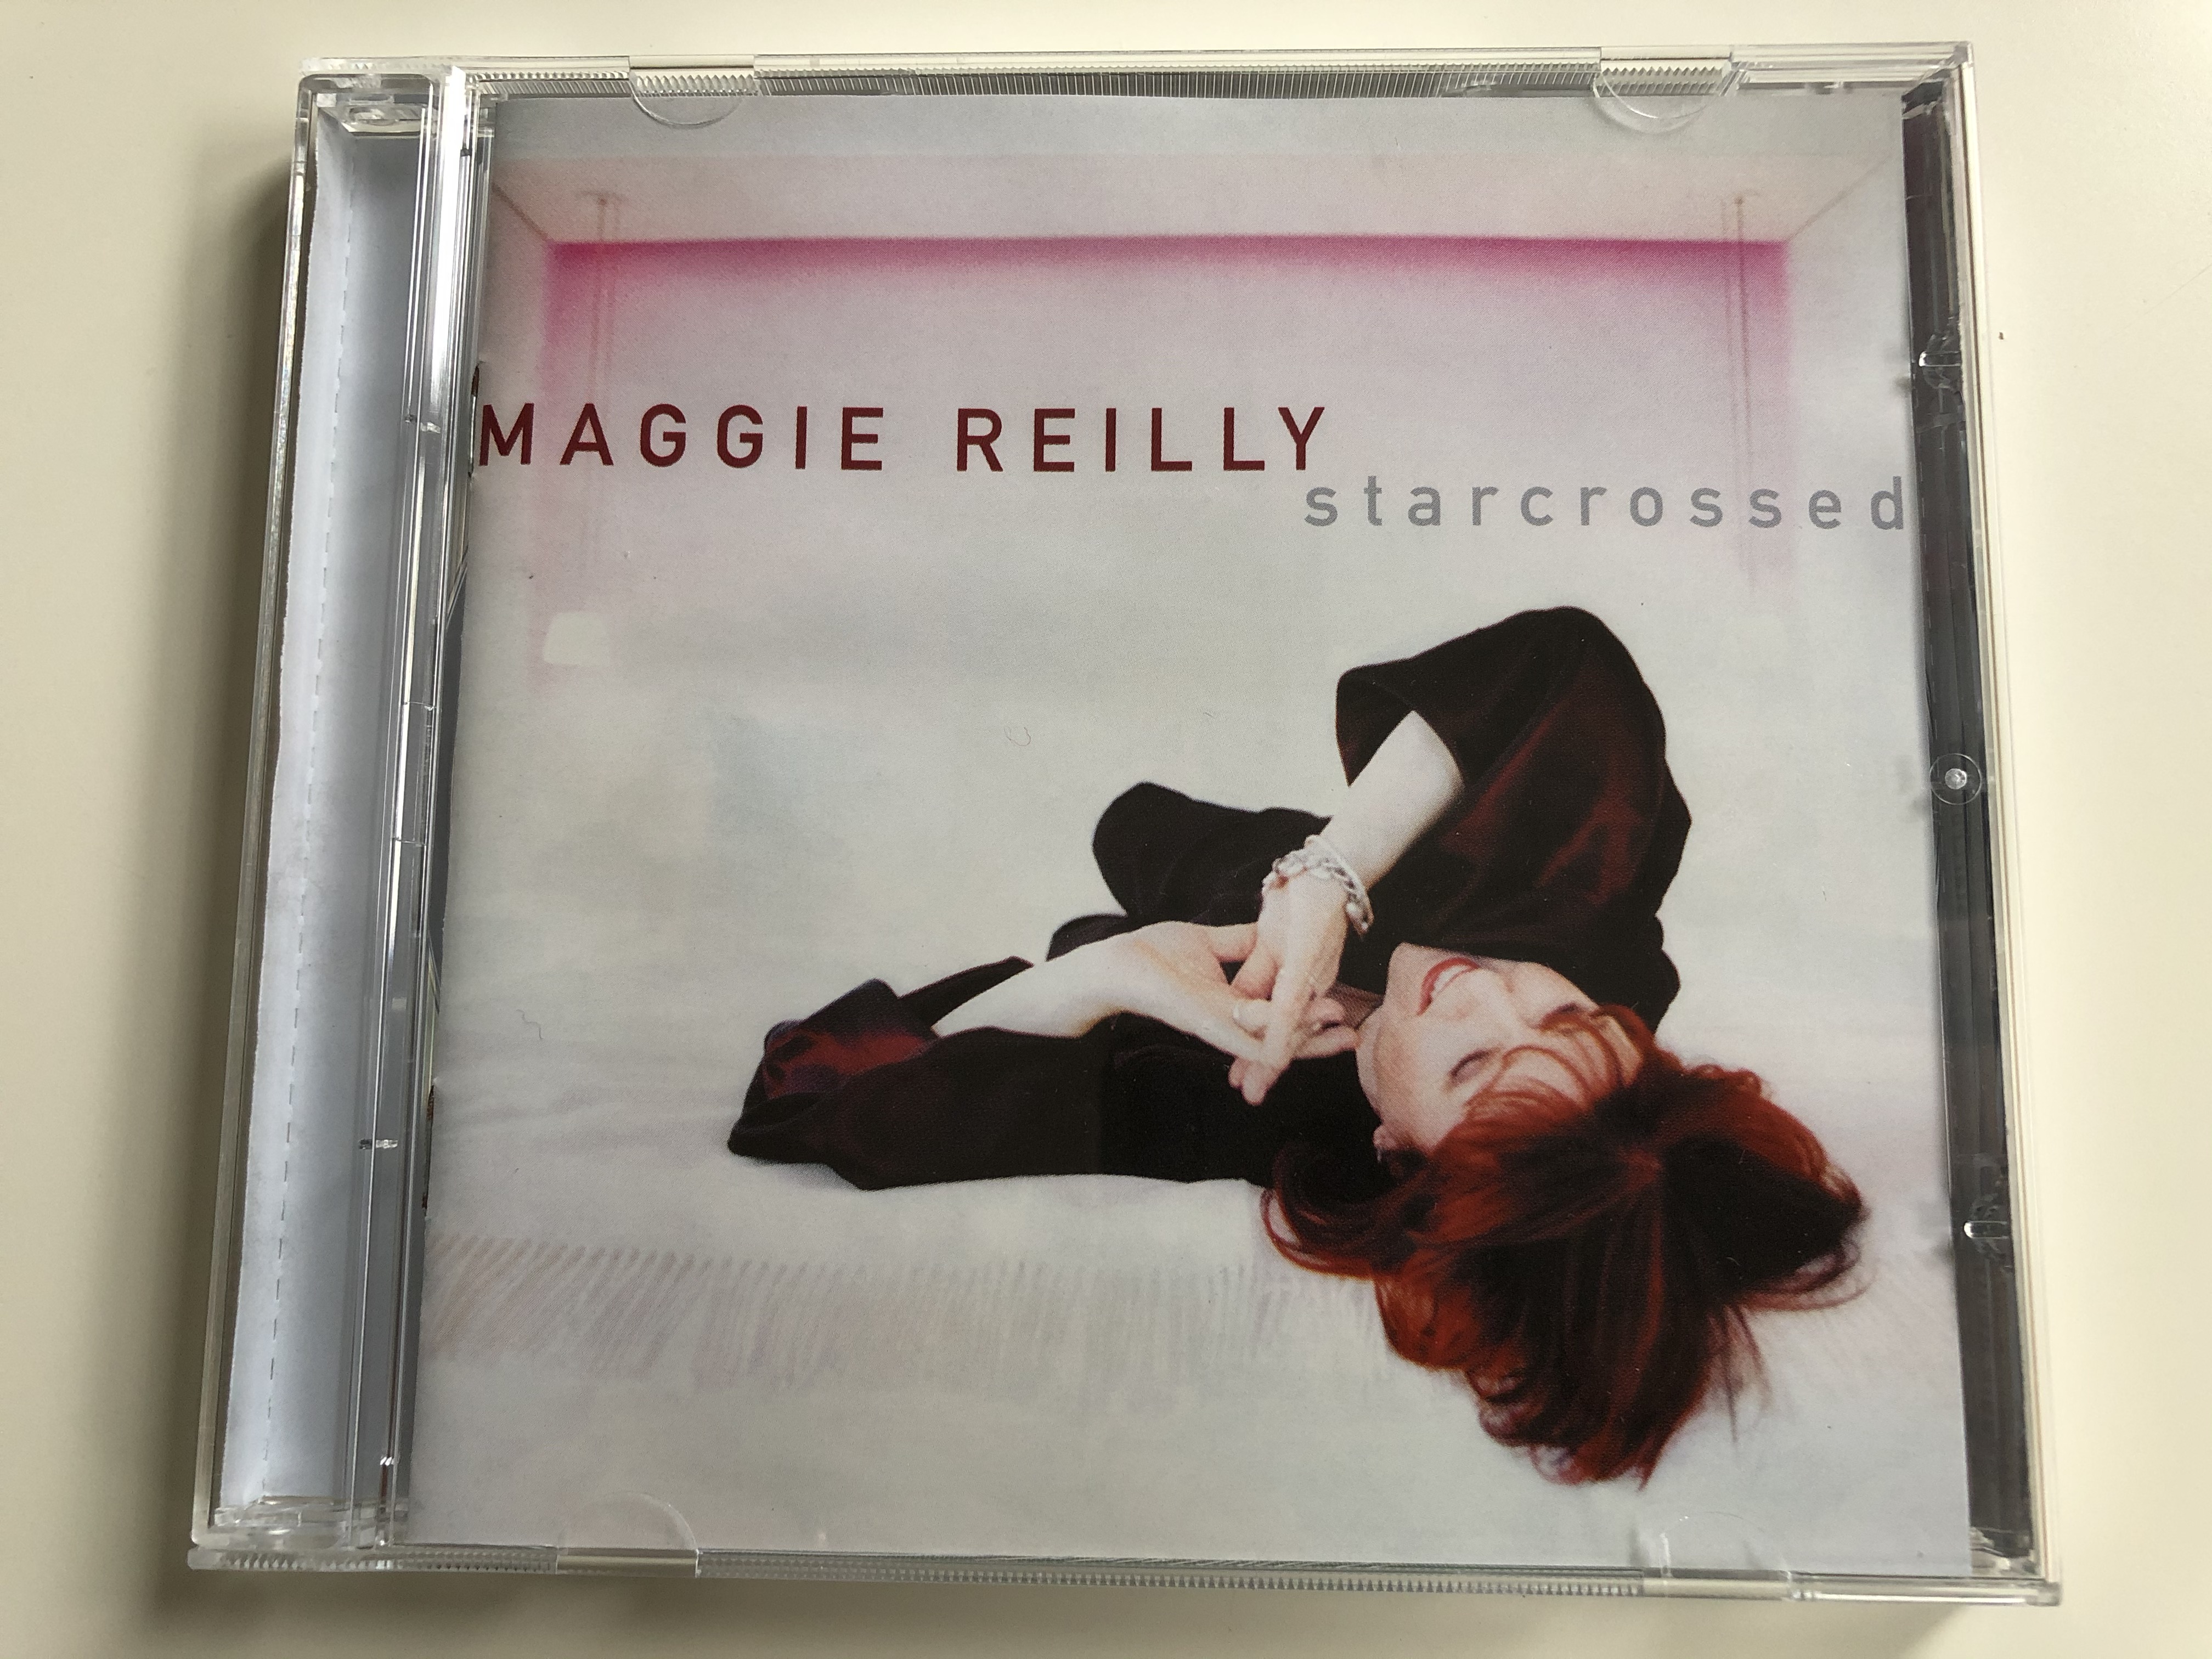 maggie-reilly-starcrossed-emi-electrola-audio-cd-2000-724352541522-1-.jpg